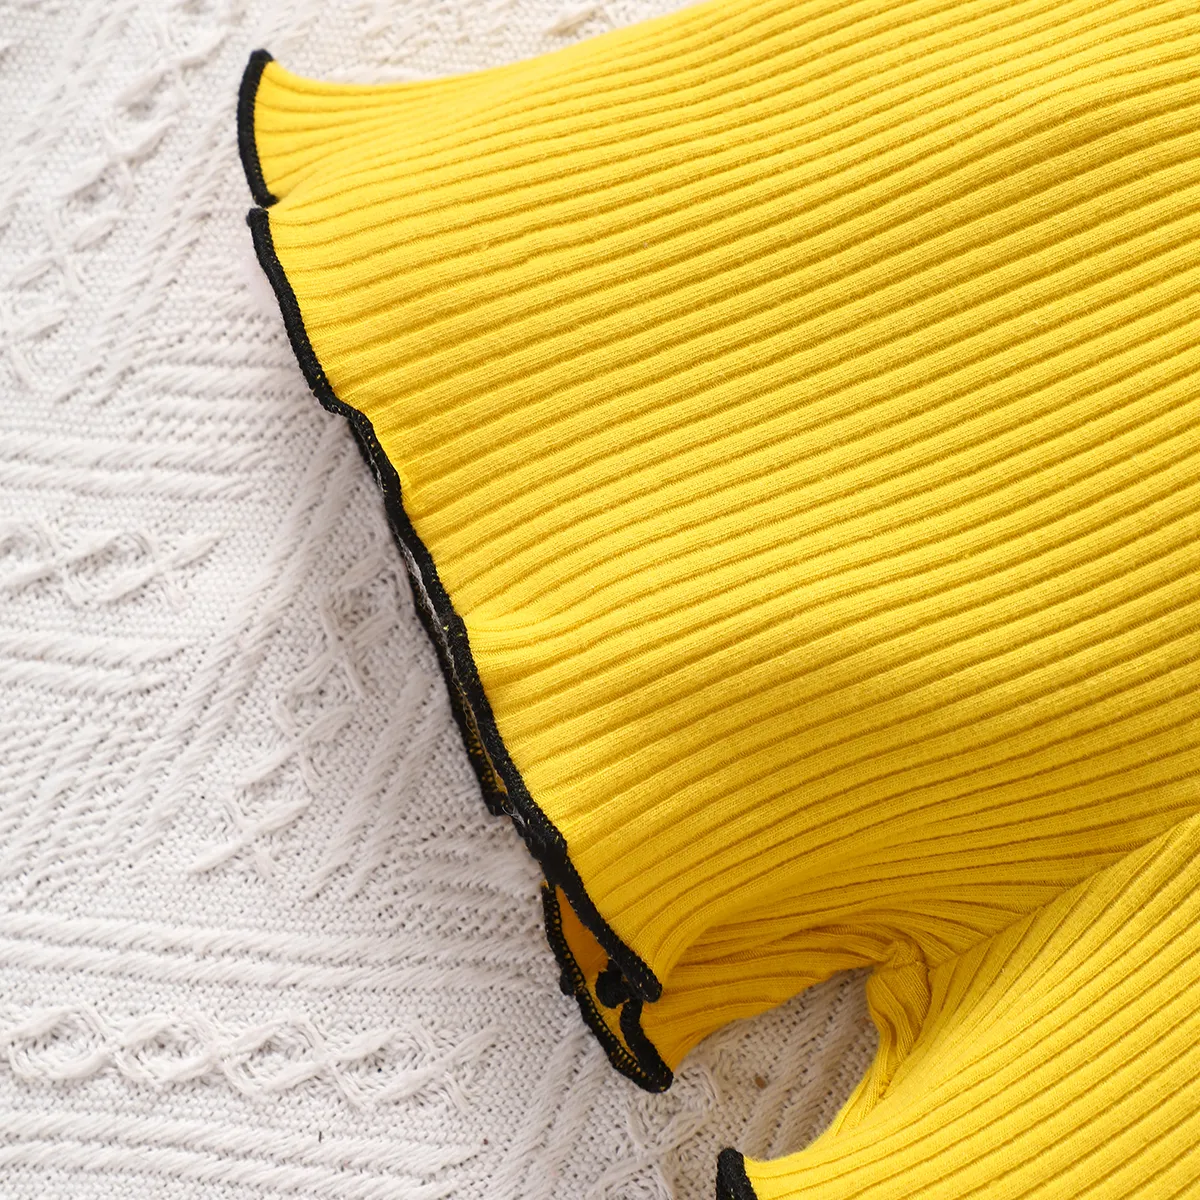 Toddler Girl Basic Solid Ribbed Cotton Shorts Yellow big image 1